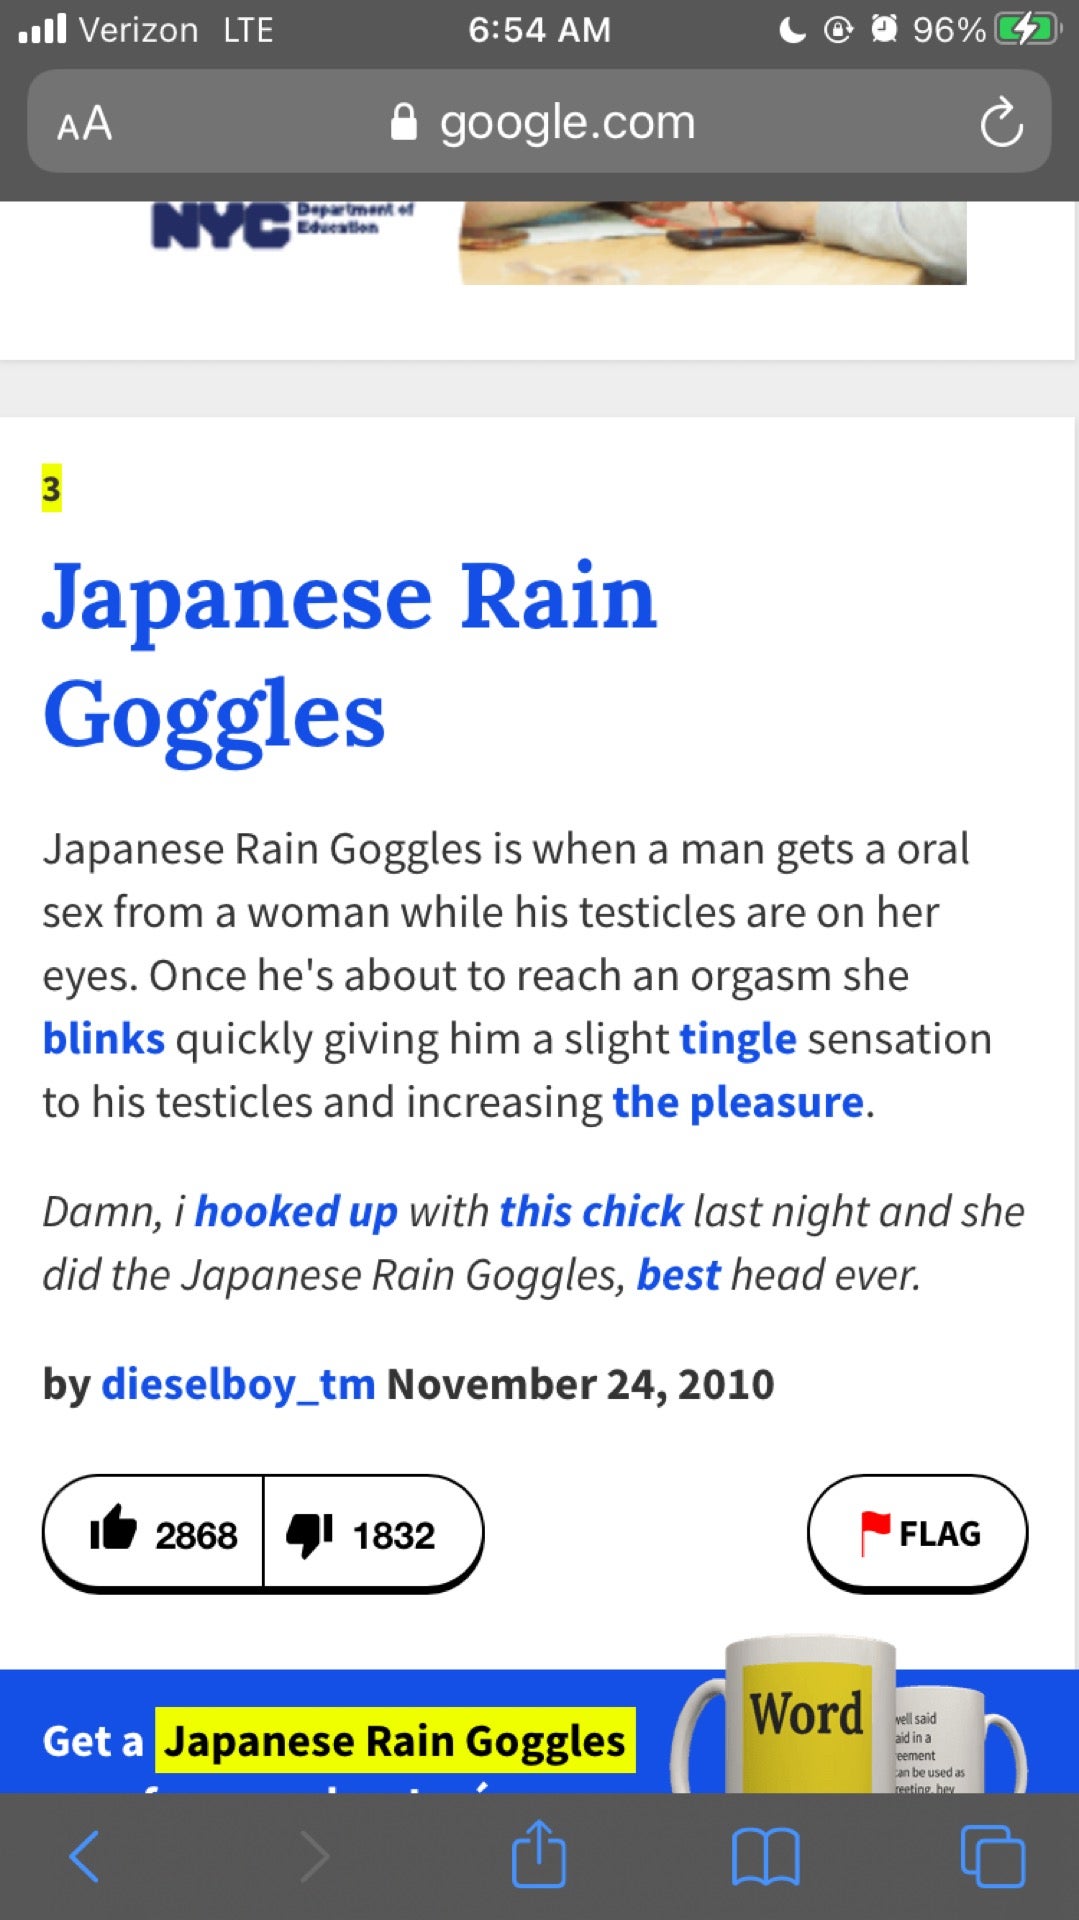 dheeraj mali recommends Japanese Rain Goggles